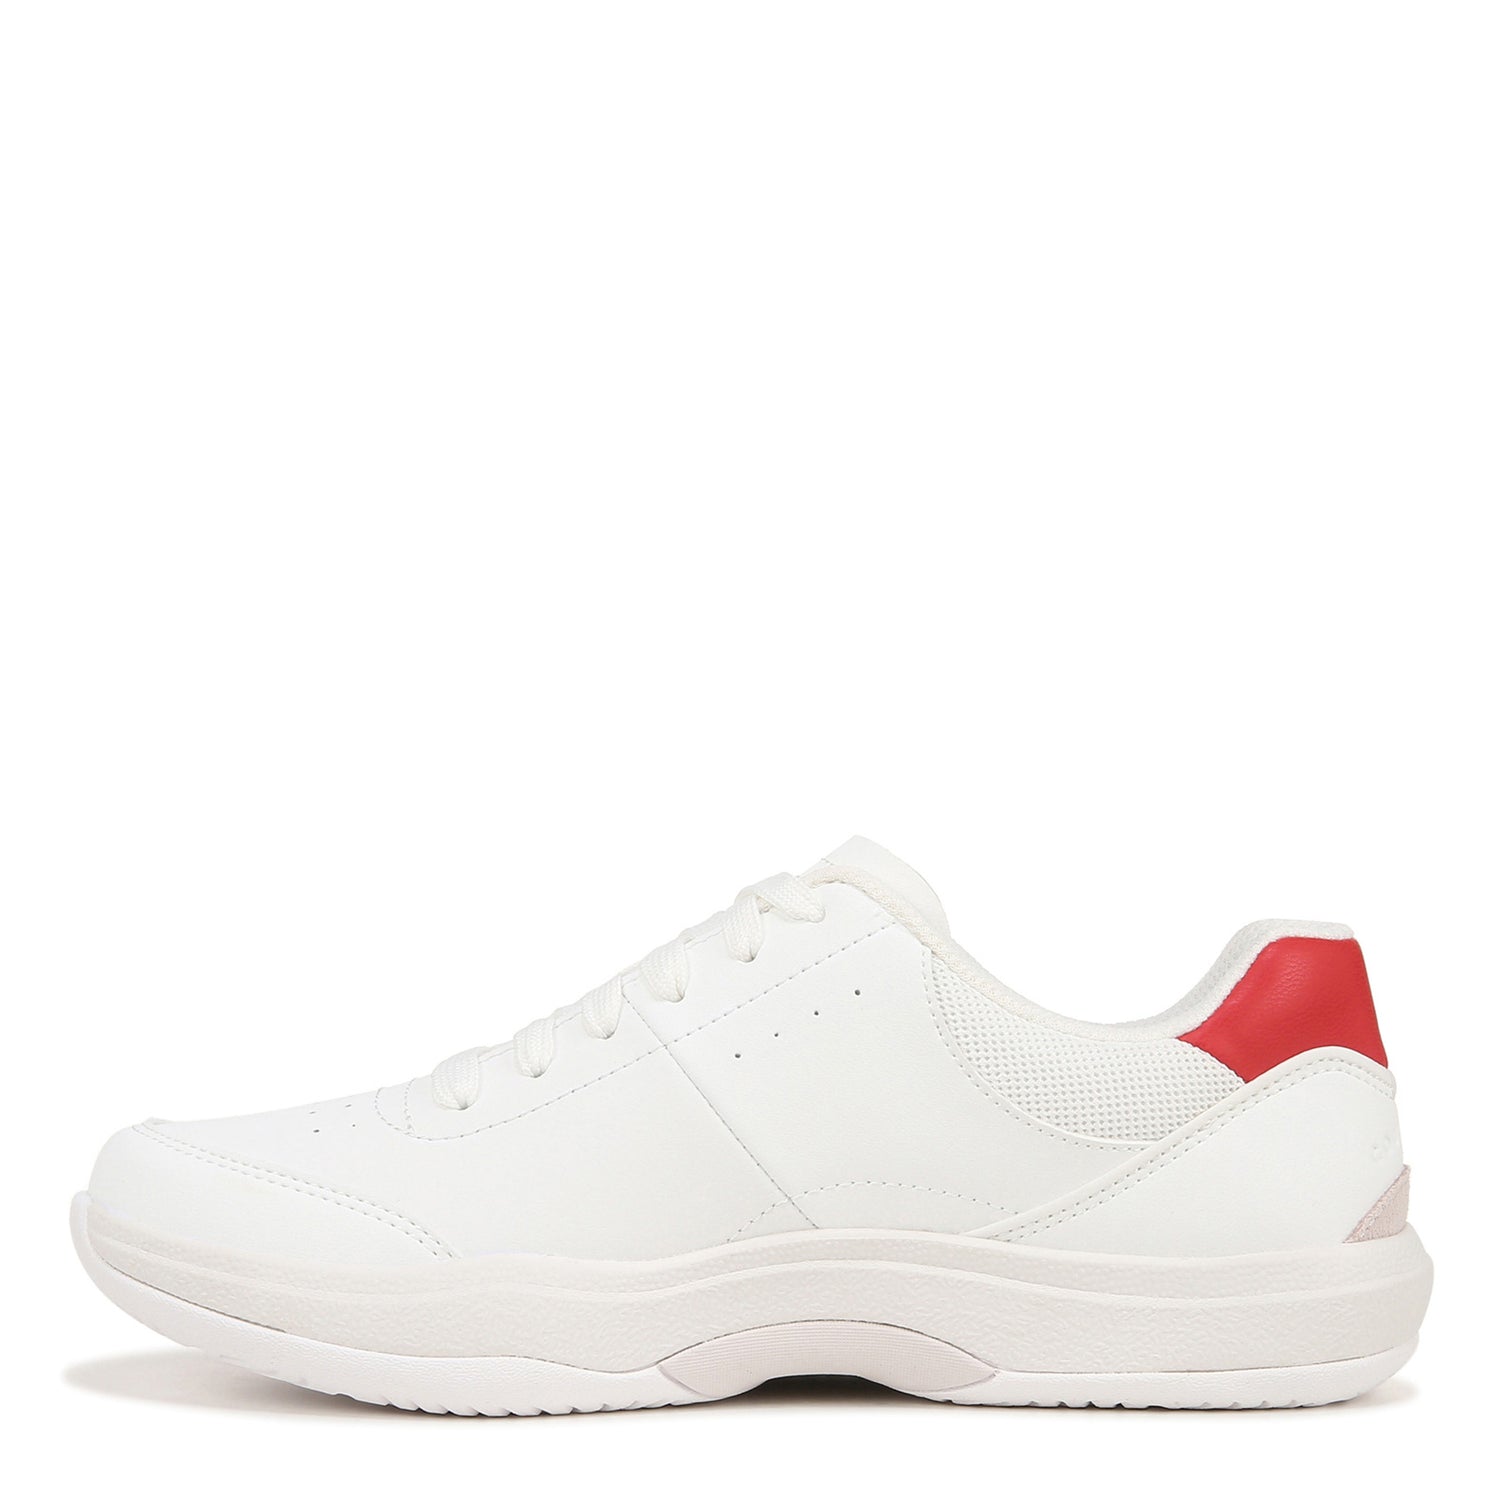 Peltz Shoes  Women's Ryka Courtside Pickleball Shoe White Red I8355F1102